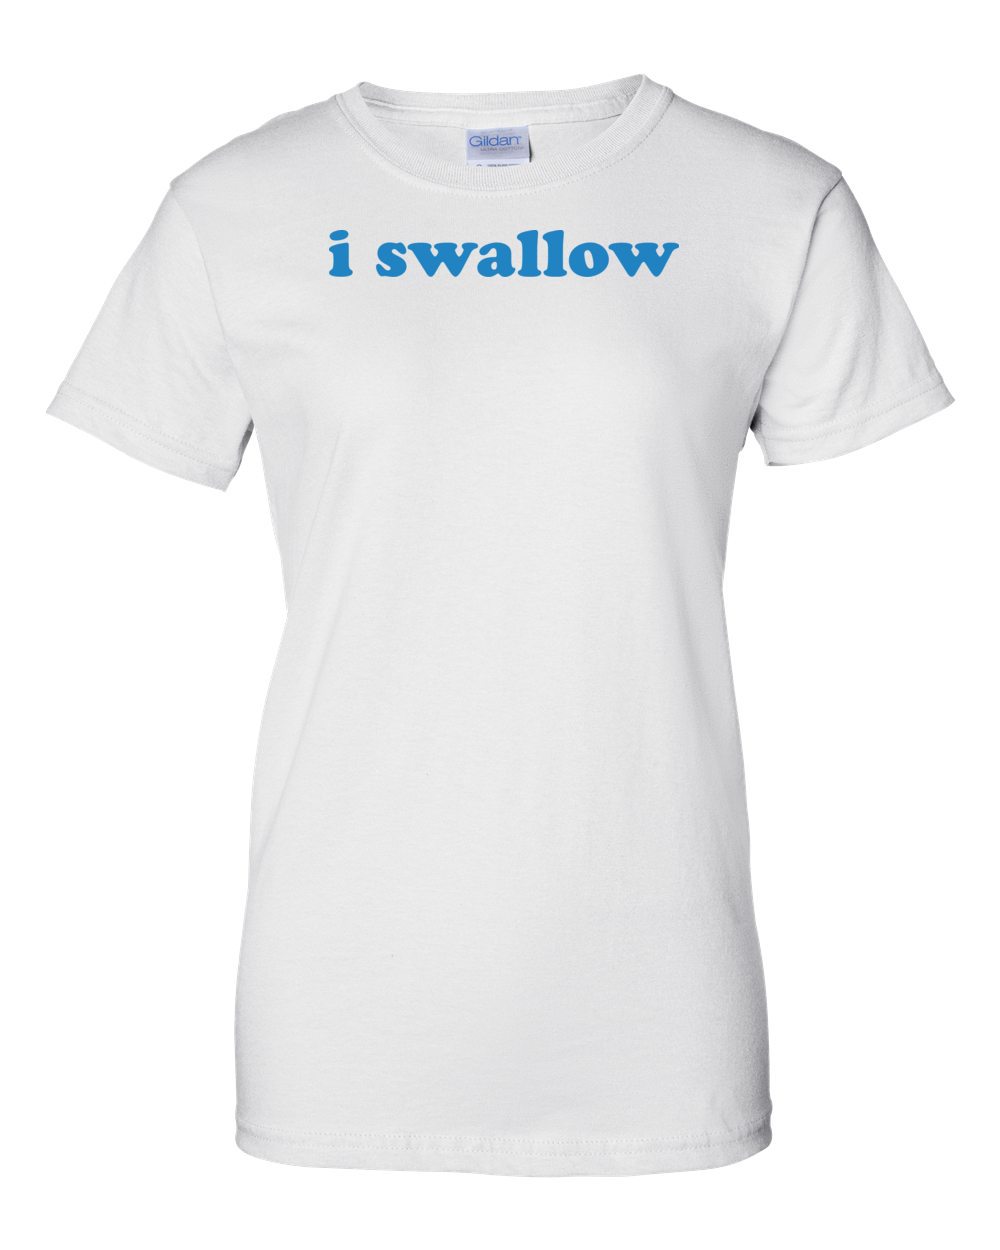 Girl Wearing I Swallow Shirt – Telegraph